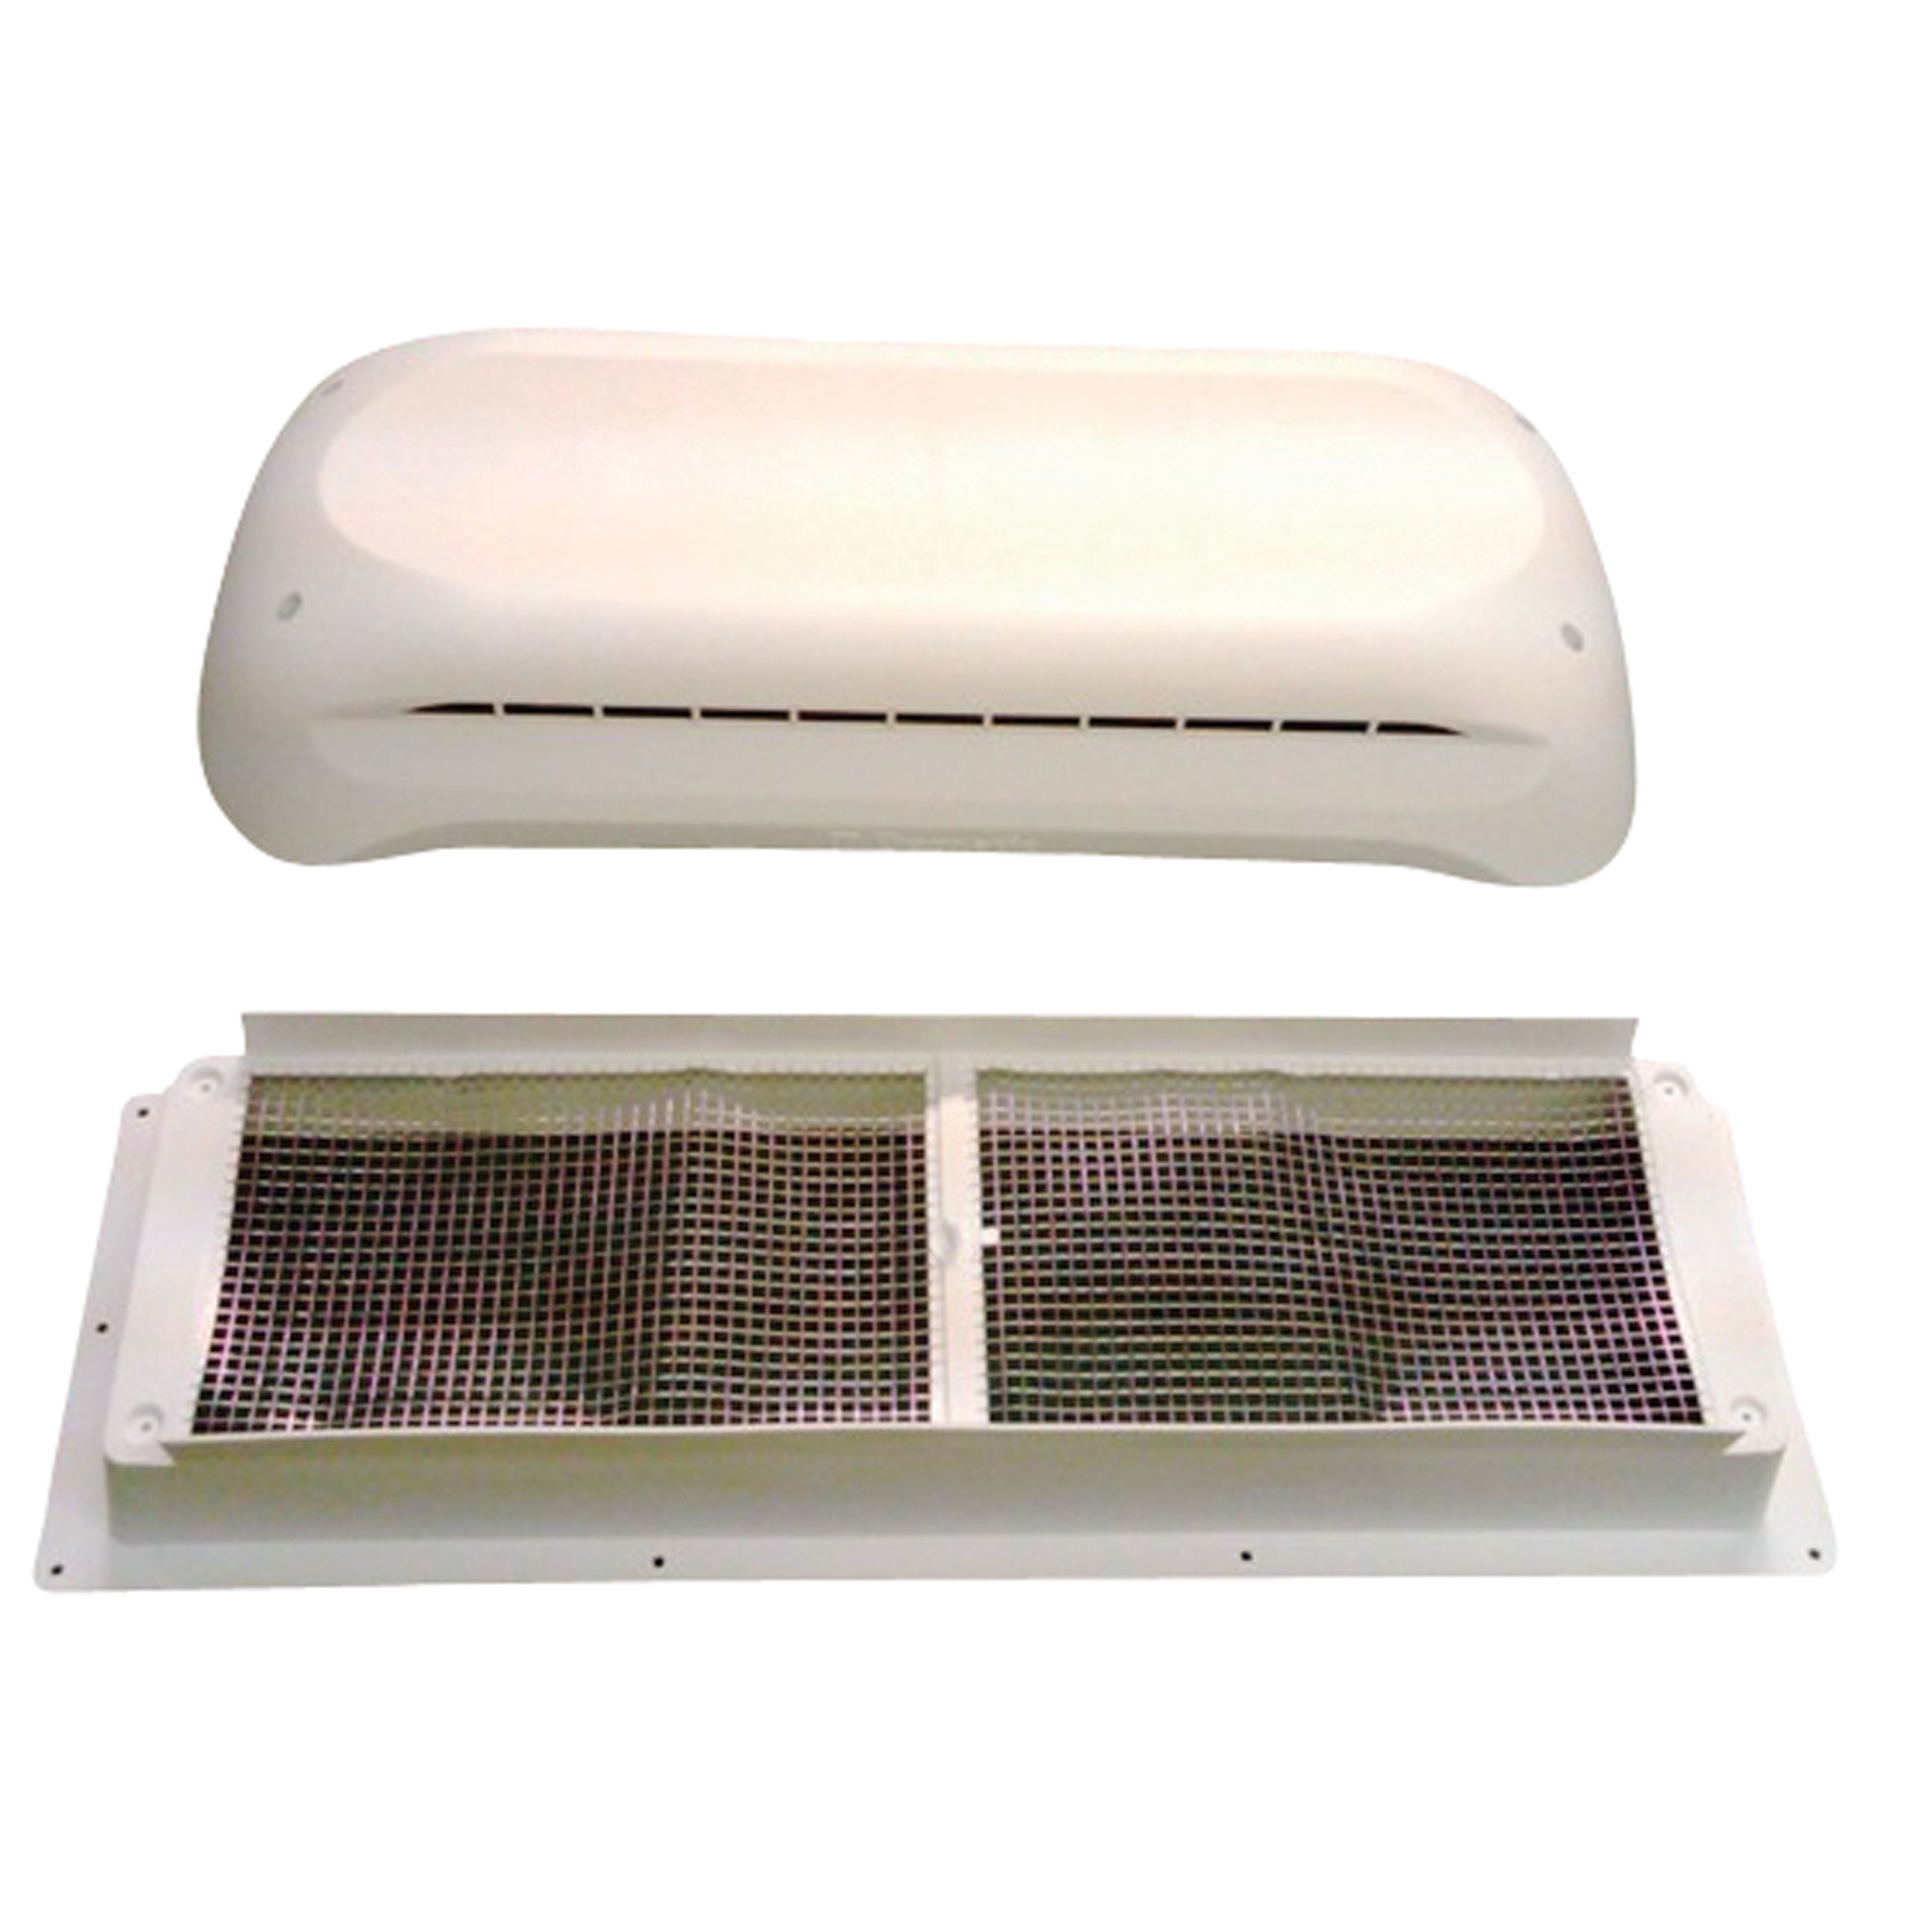 Dometic 3311236000 Refrigerator Roof Vent Kit, Polar White - image 1 of 2